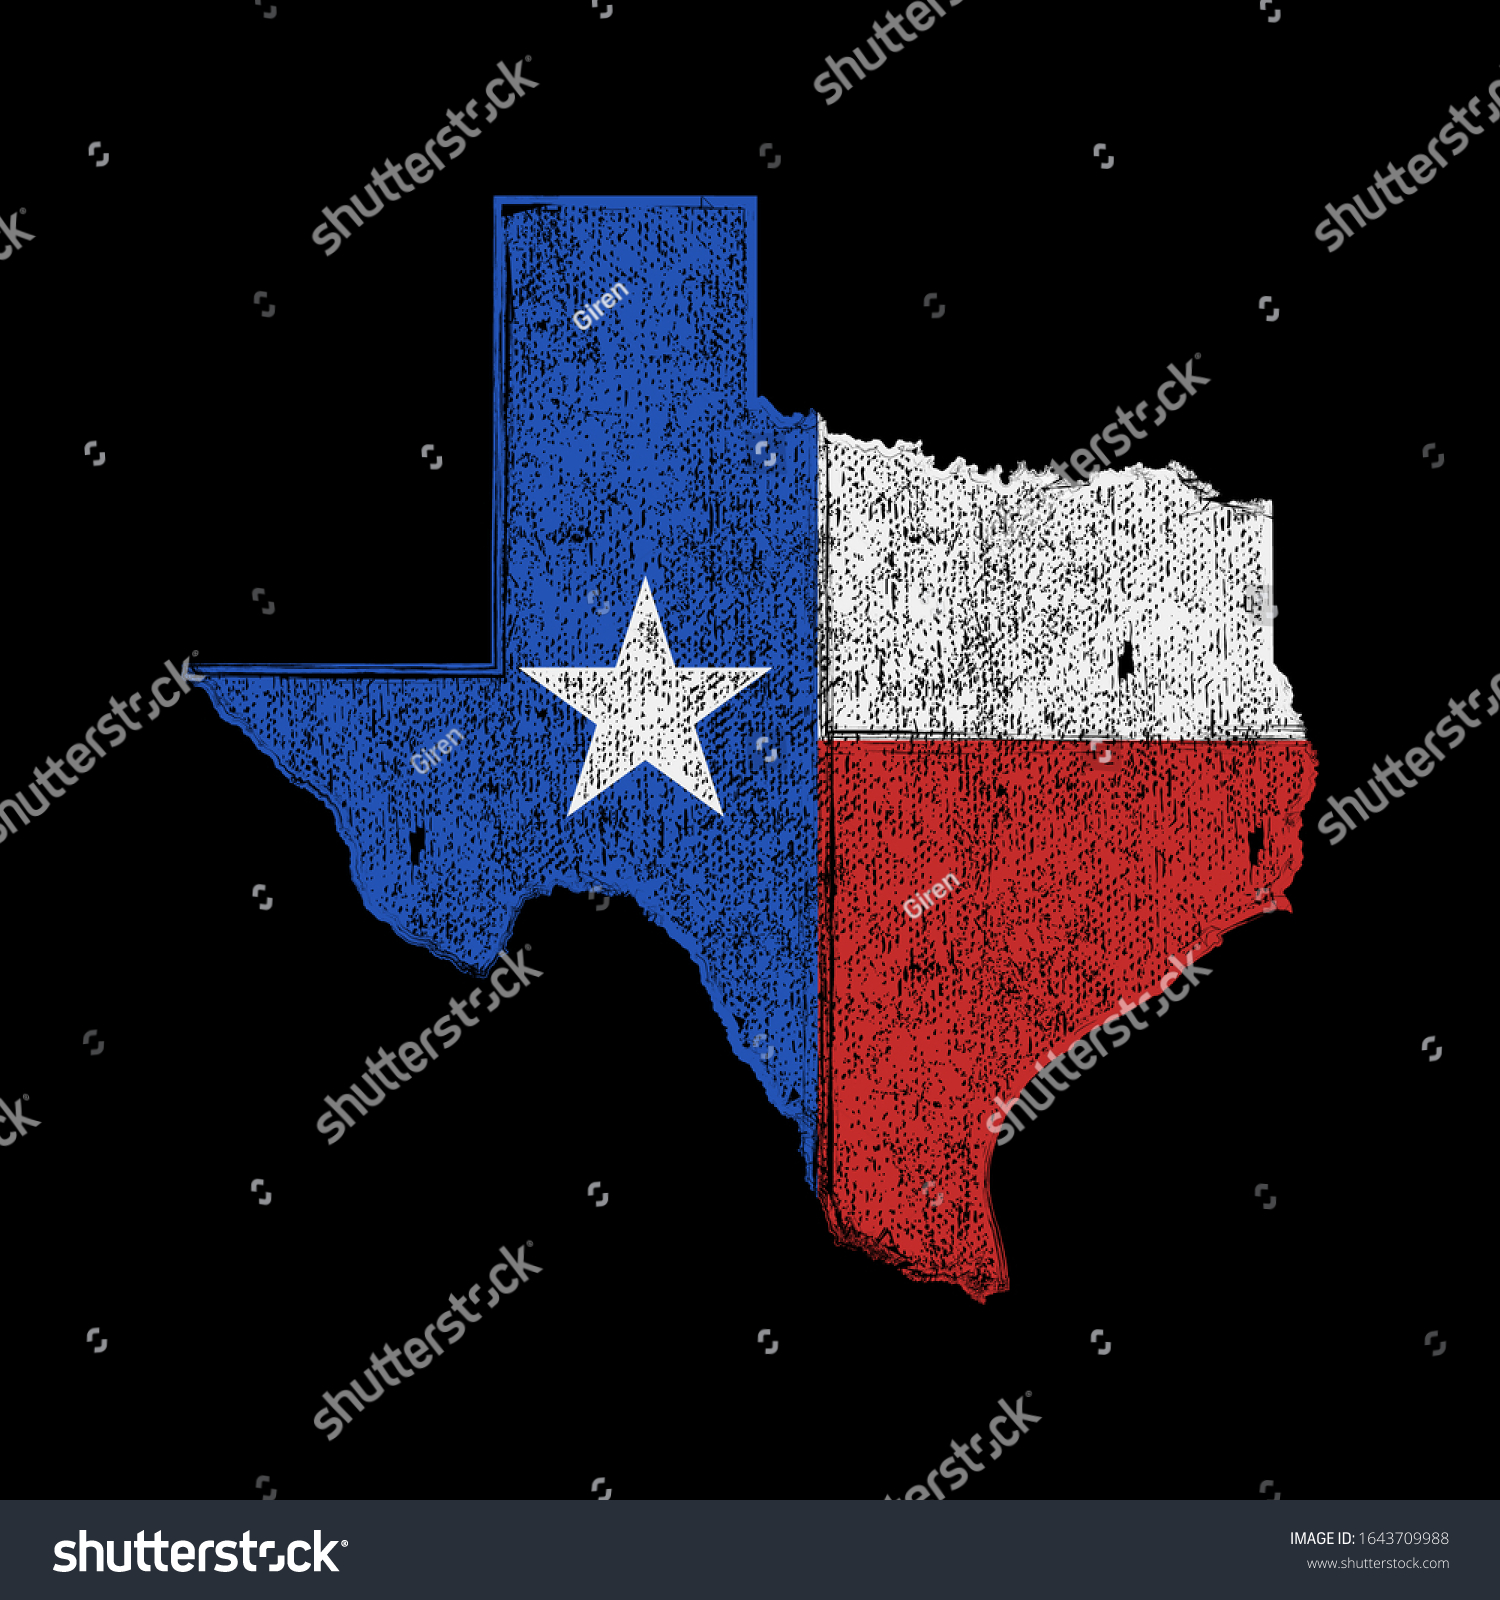 Texas Map Grunge Vector Design Stock Vector Royalty Free 1643709988 Shutterstock 4489